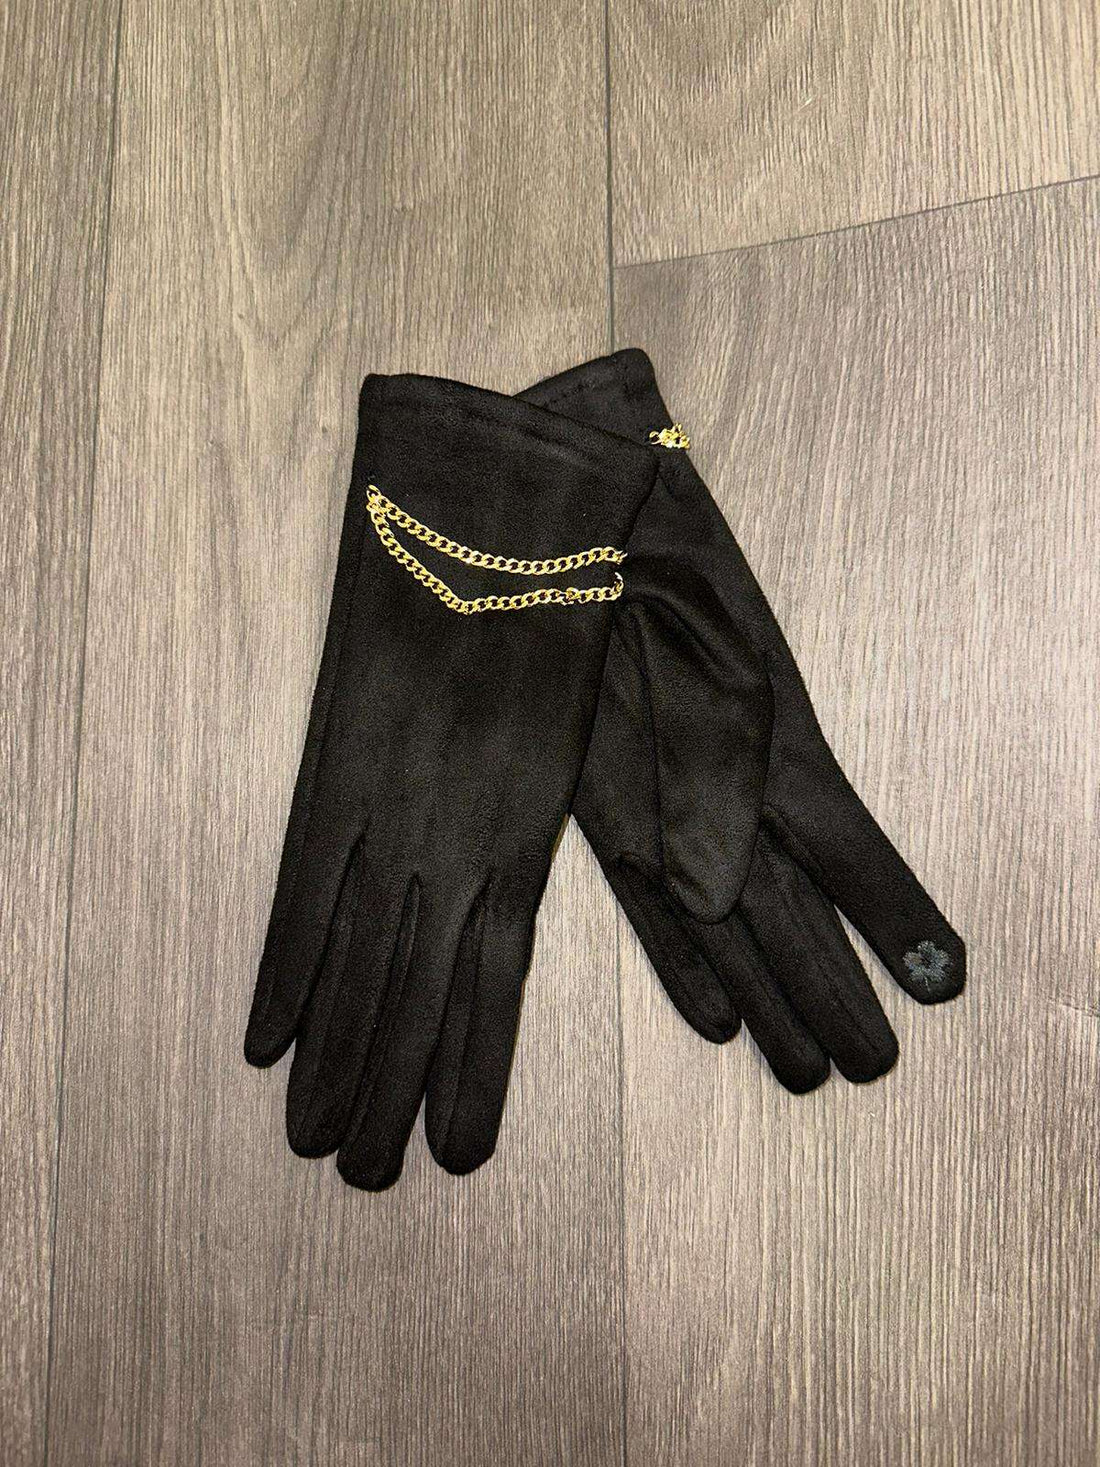 Link Chain Gloves